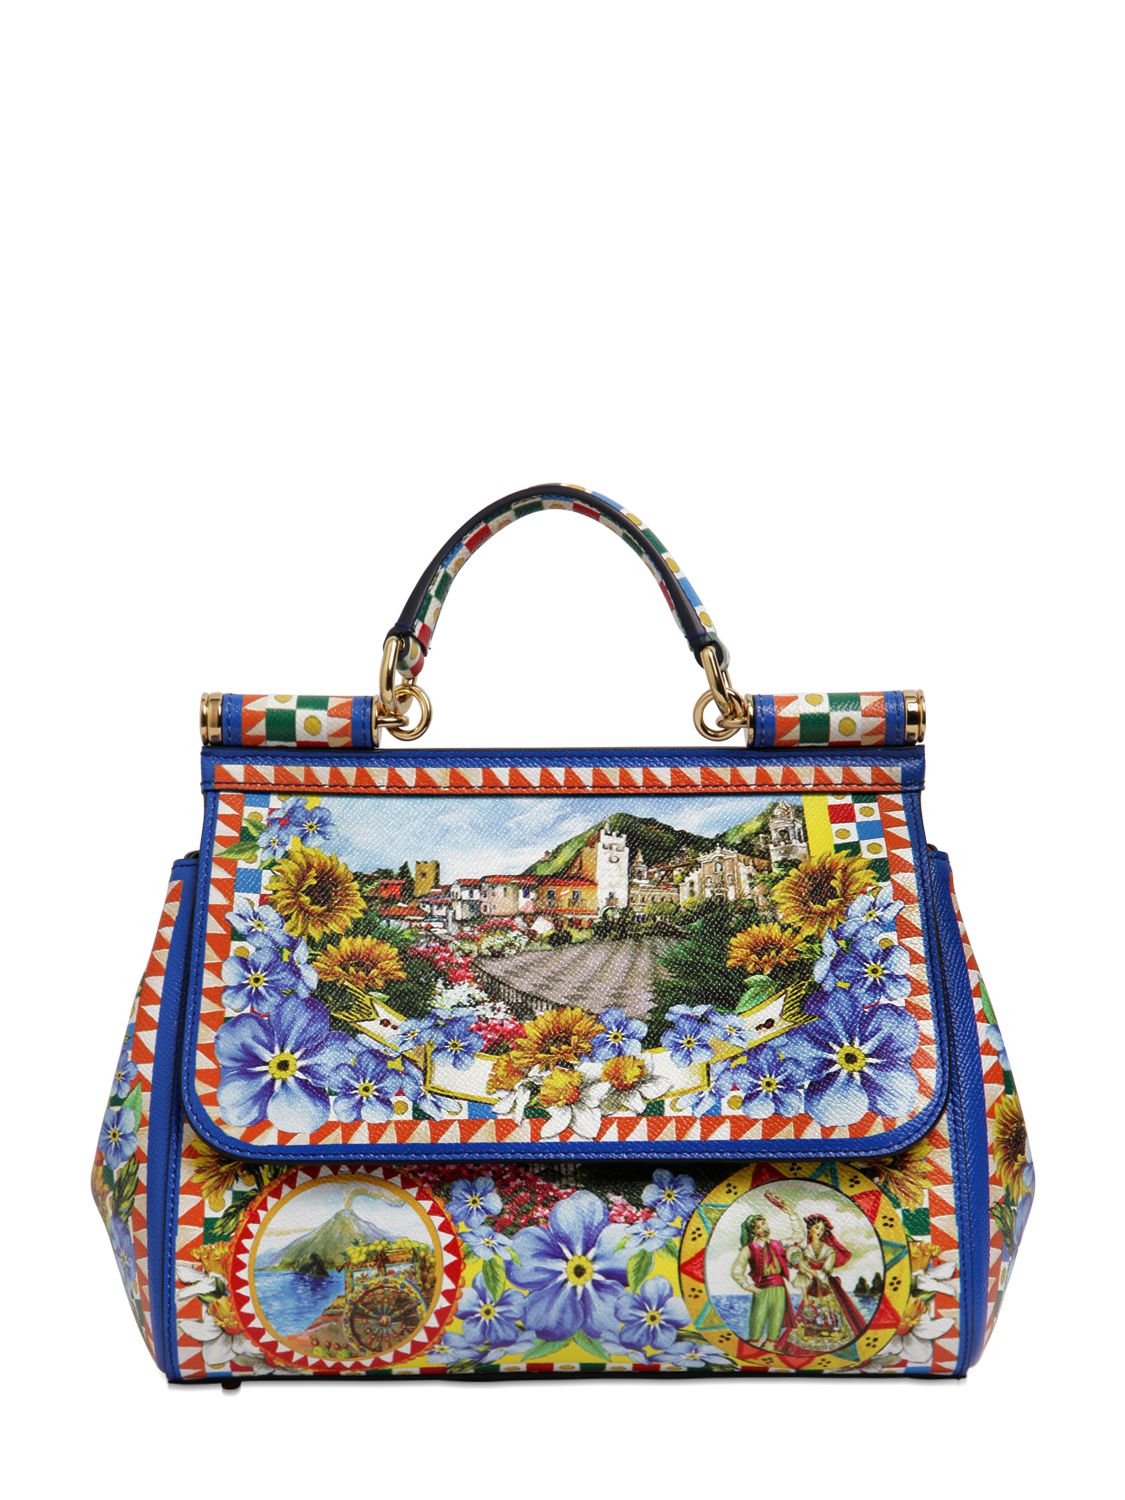 Dolce & Gabbana Medium Sicily Sicilia Print Leather Bag - Lyst